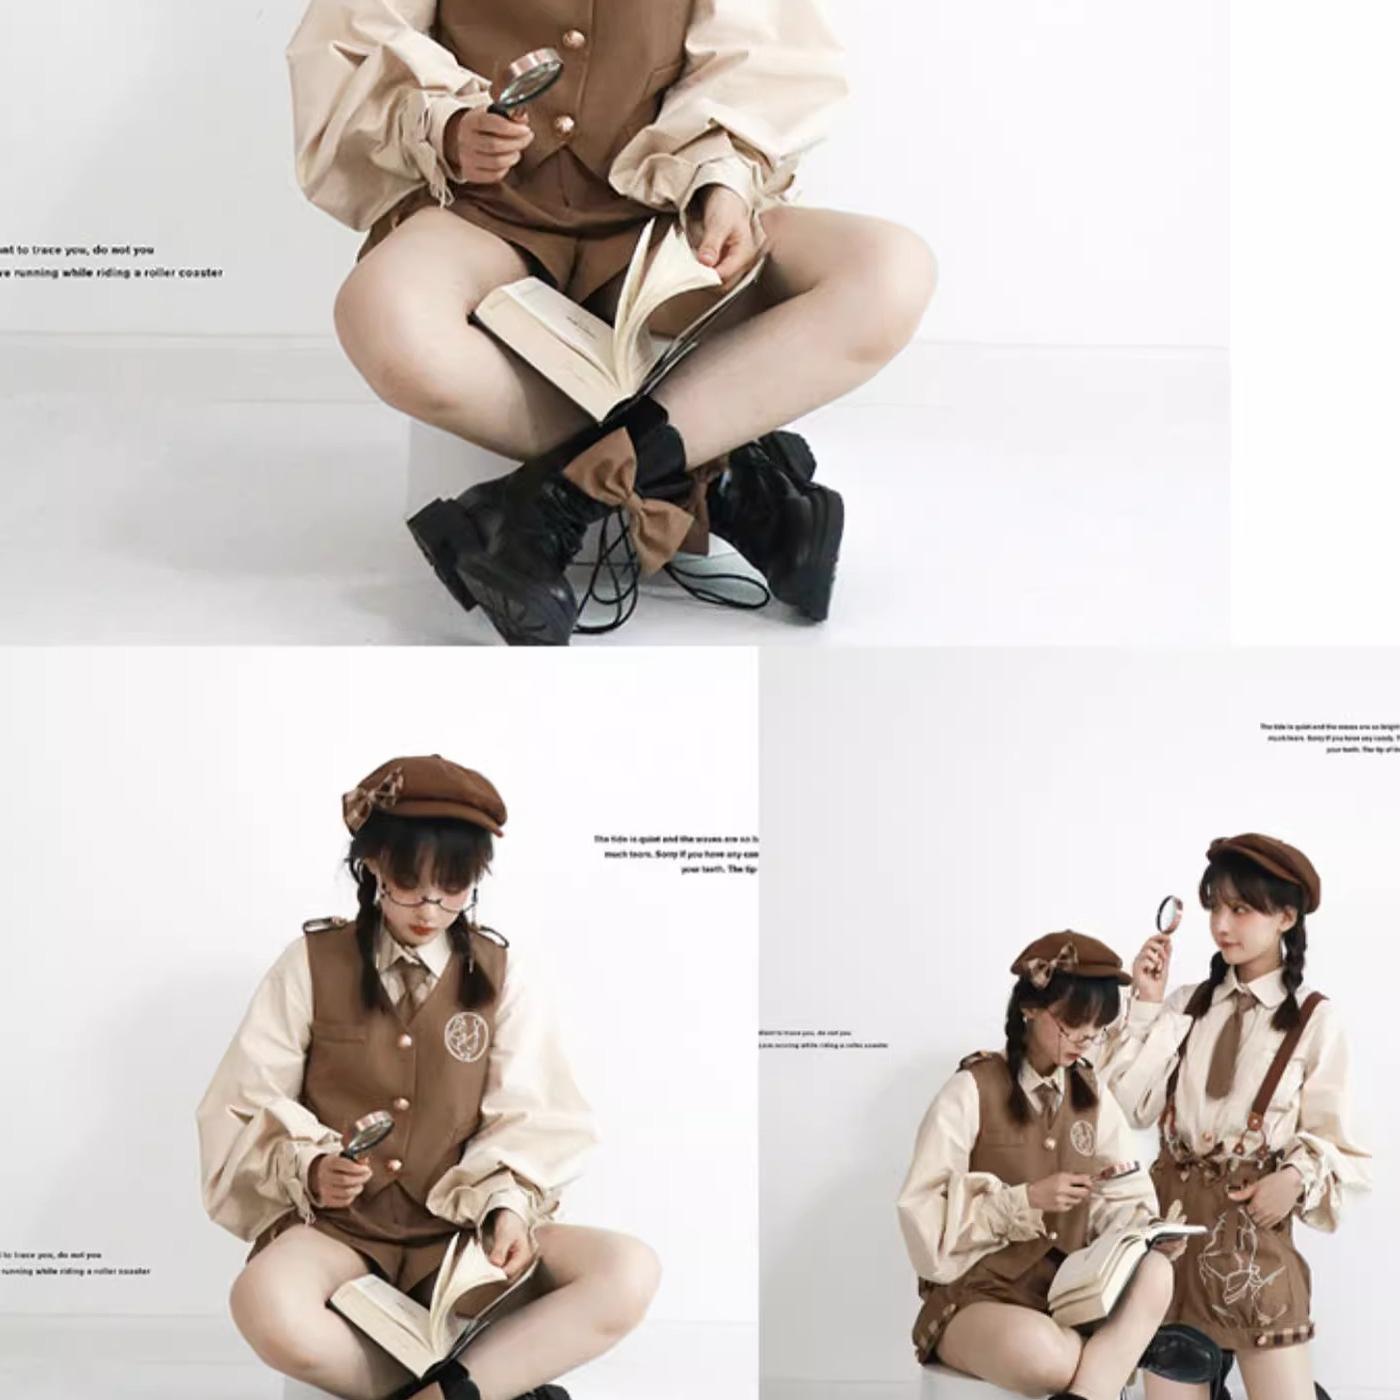 Steamed Stuffed Pig~Famous Detective Goose~Kawaii Lolita Bag and Hat   